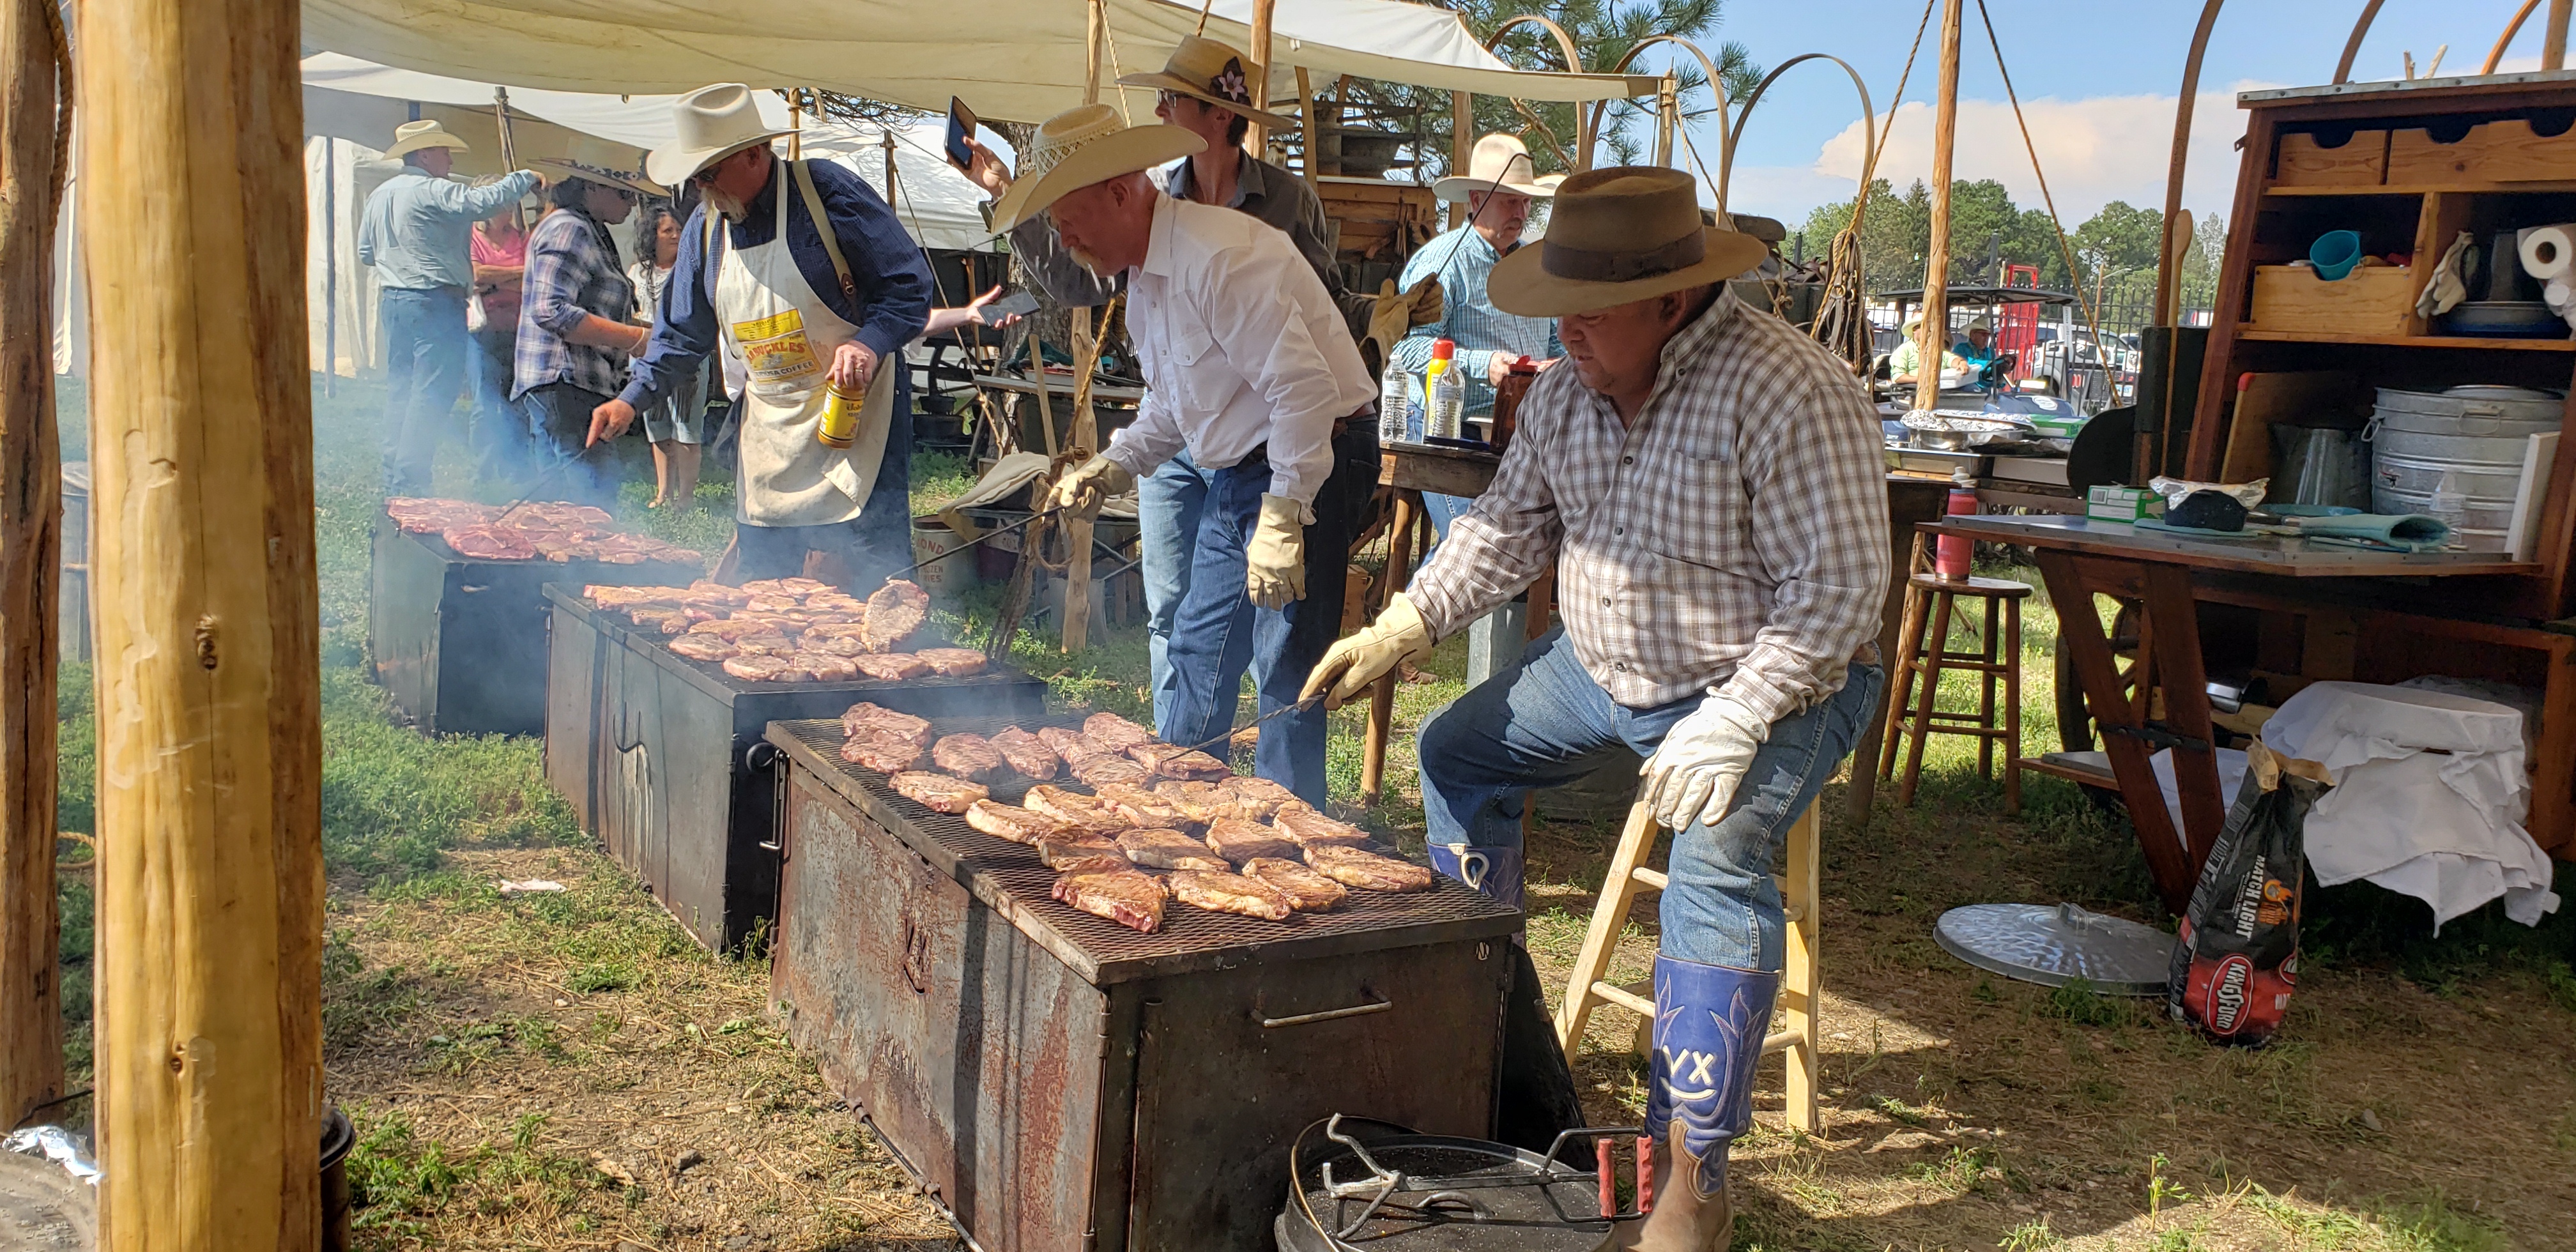 Chuck wagons: A cowboy's lifeline, Food